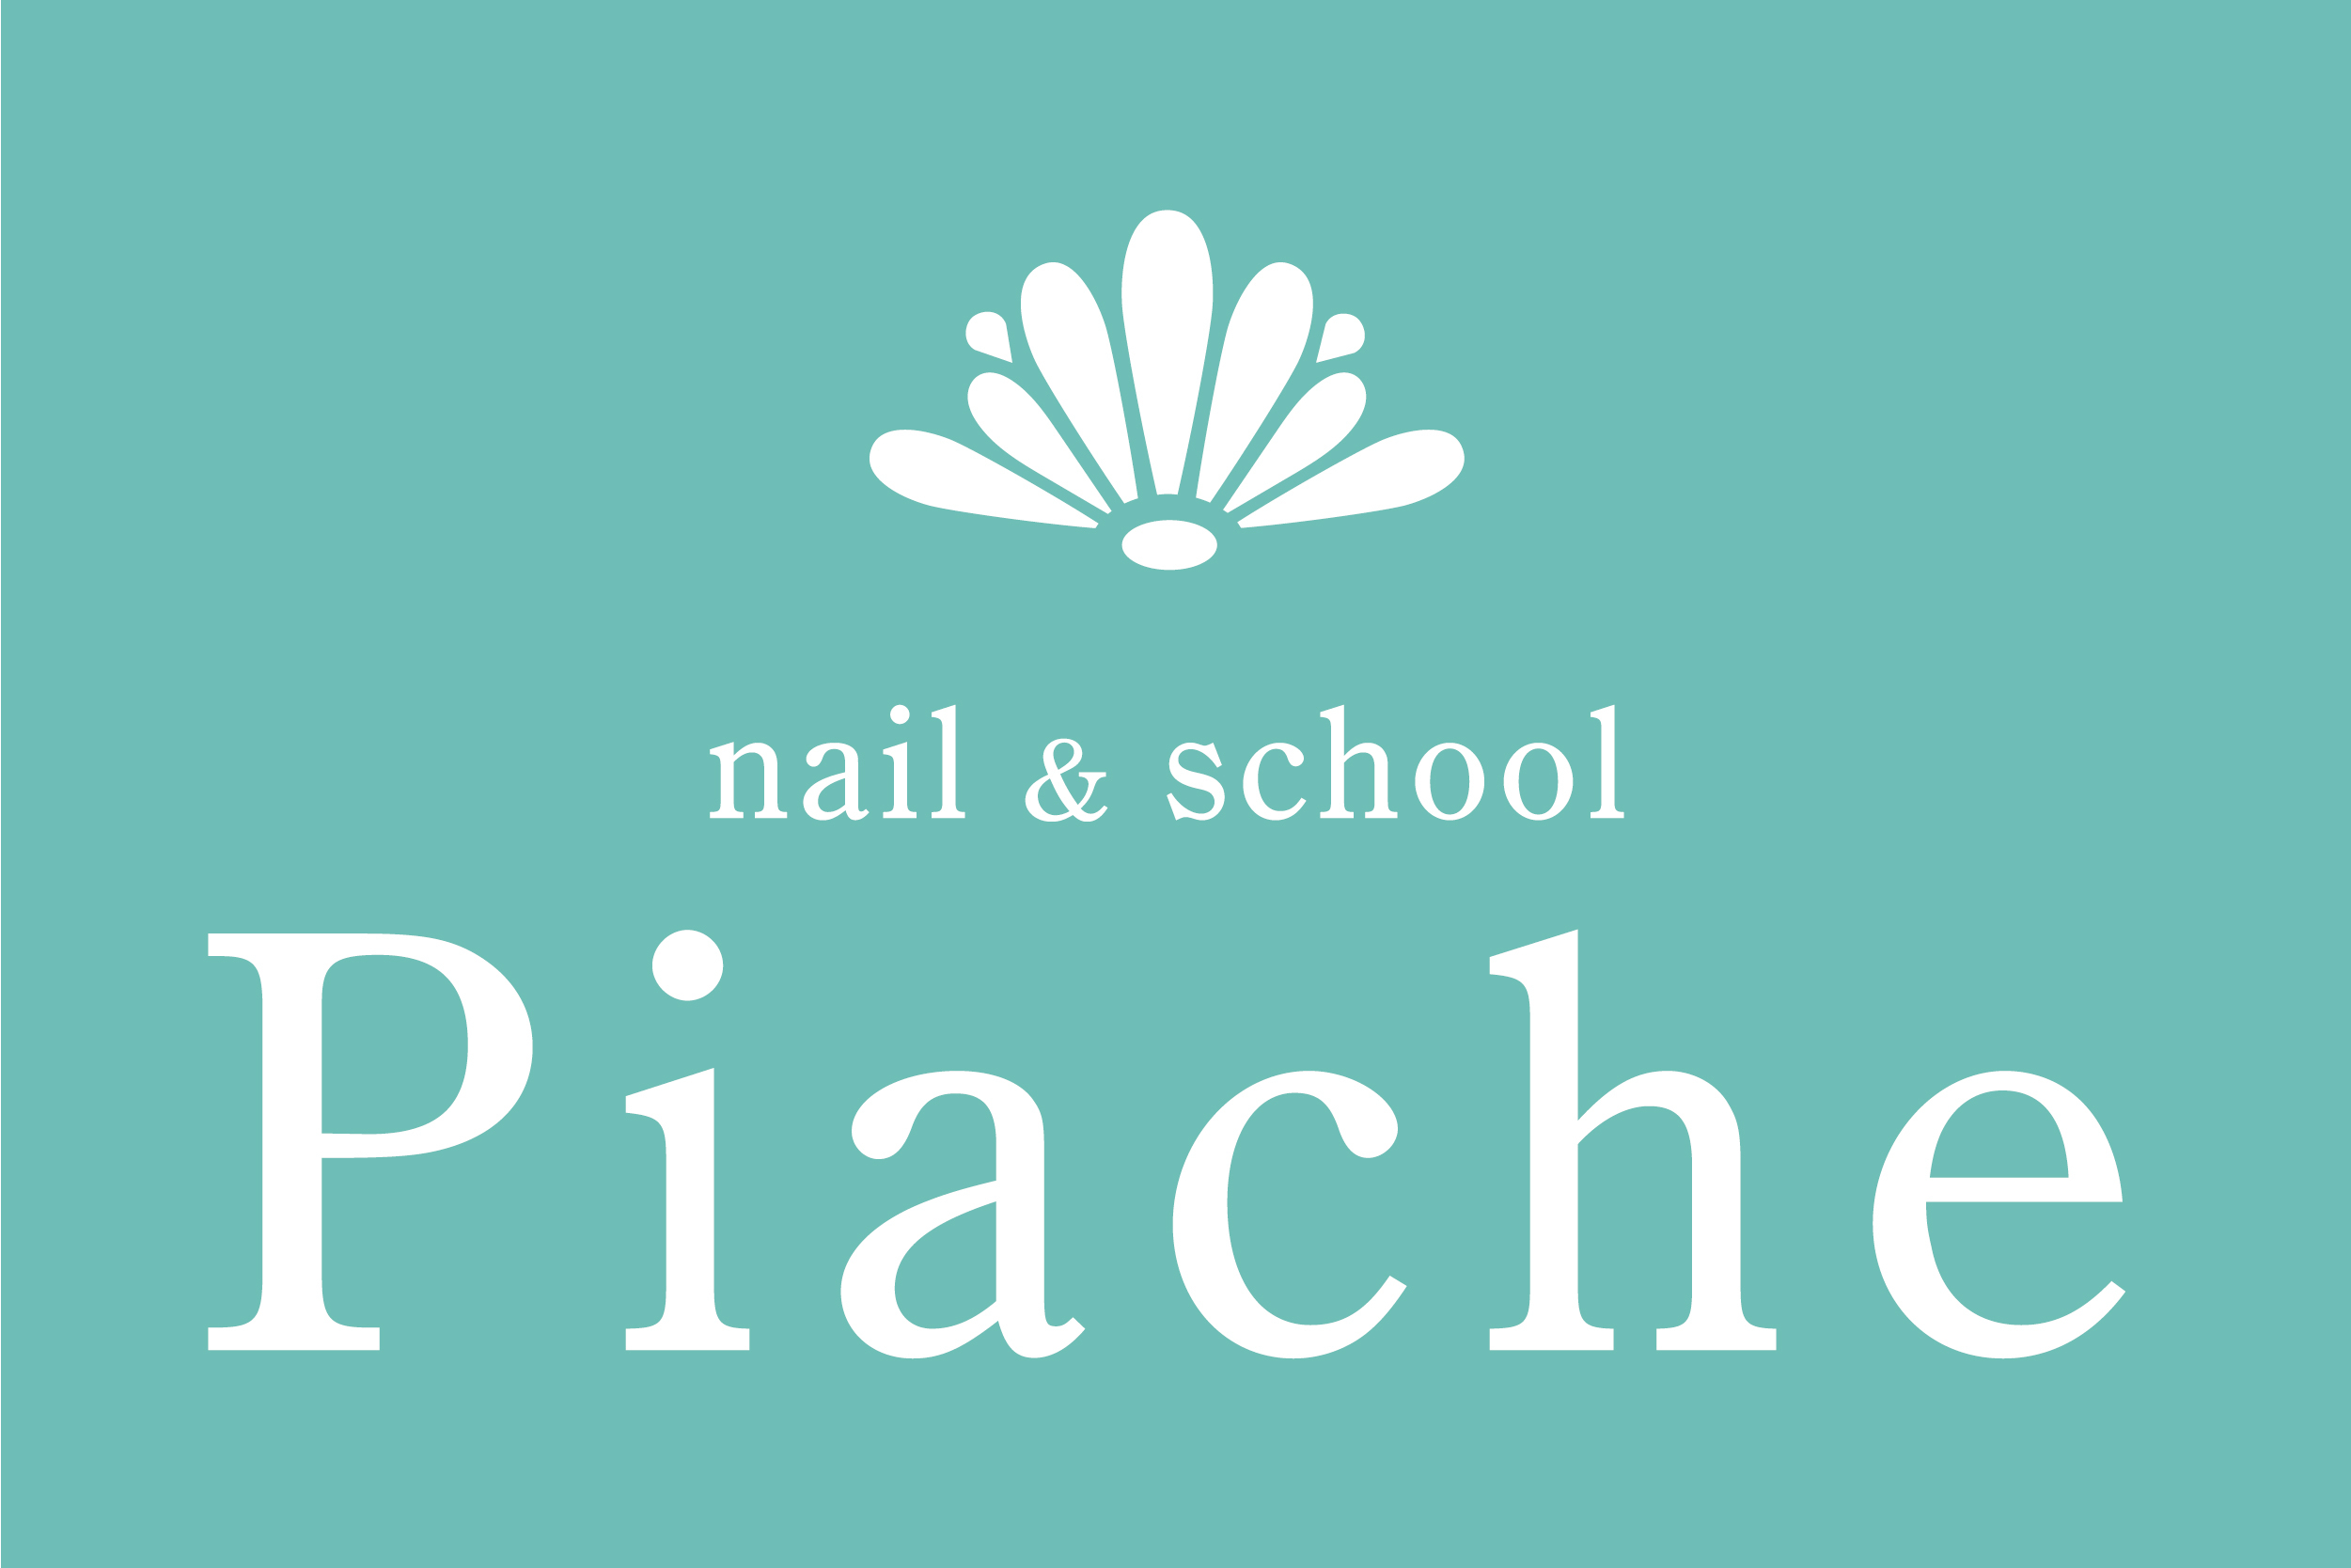 nail & school Piache